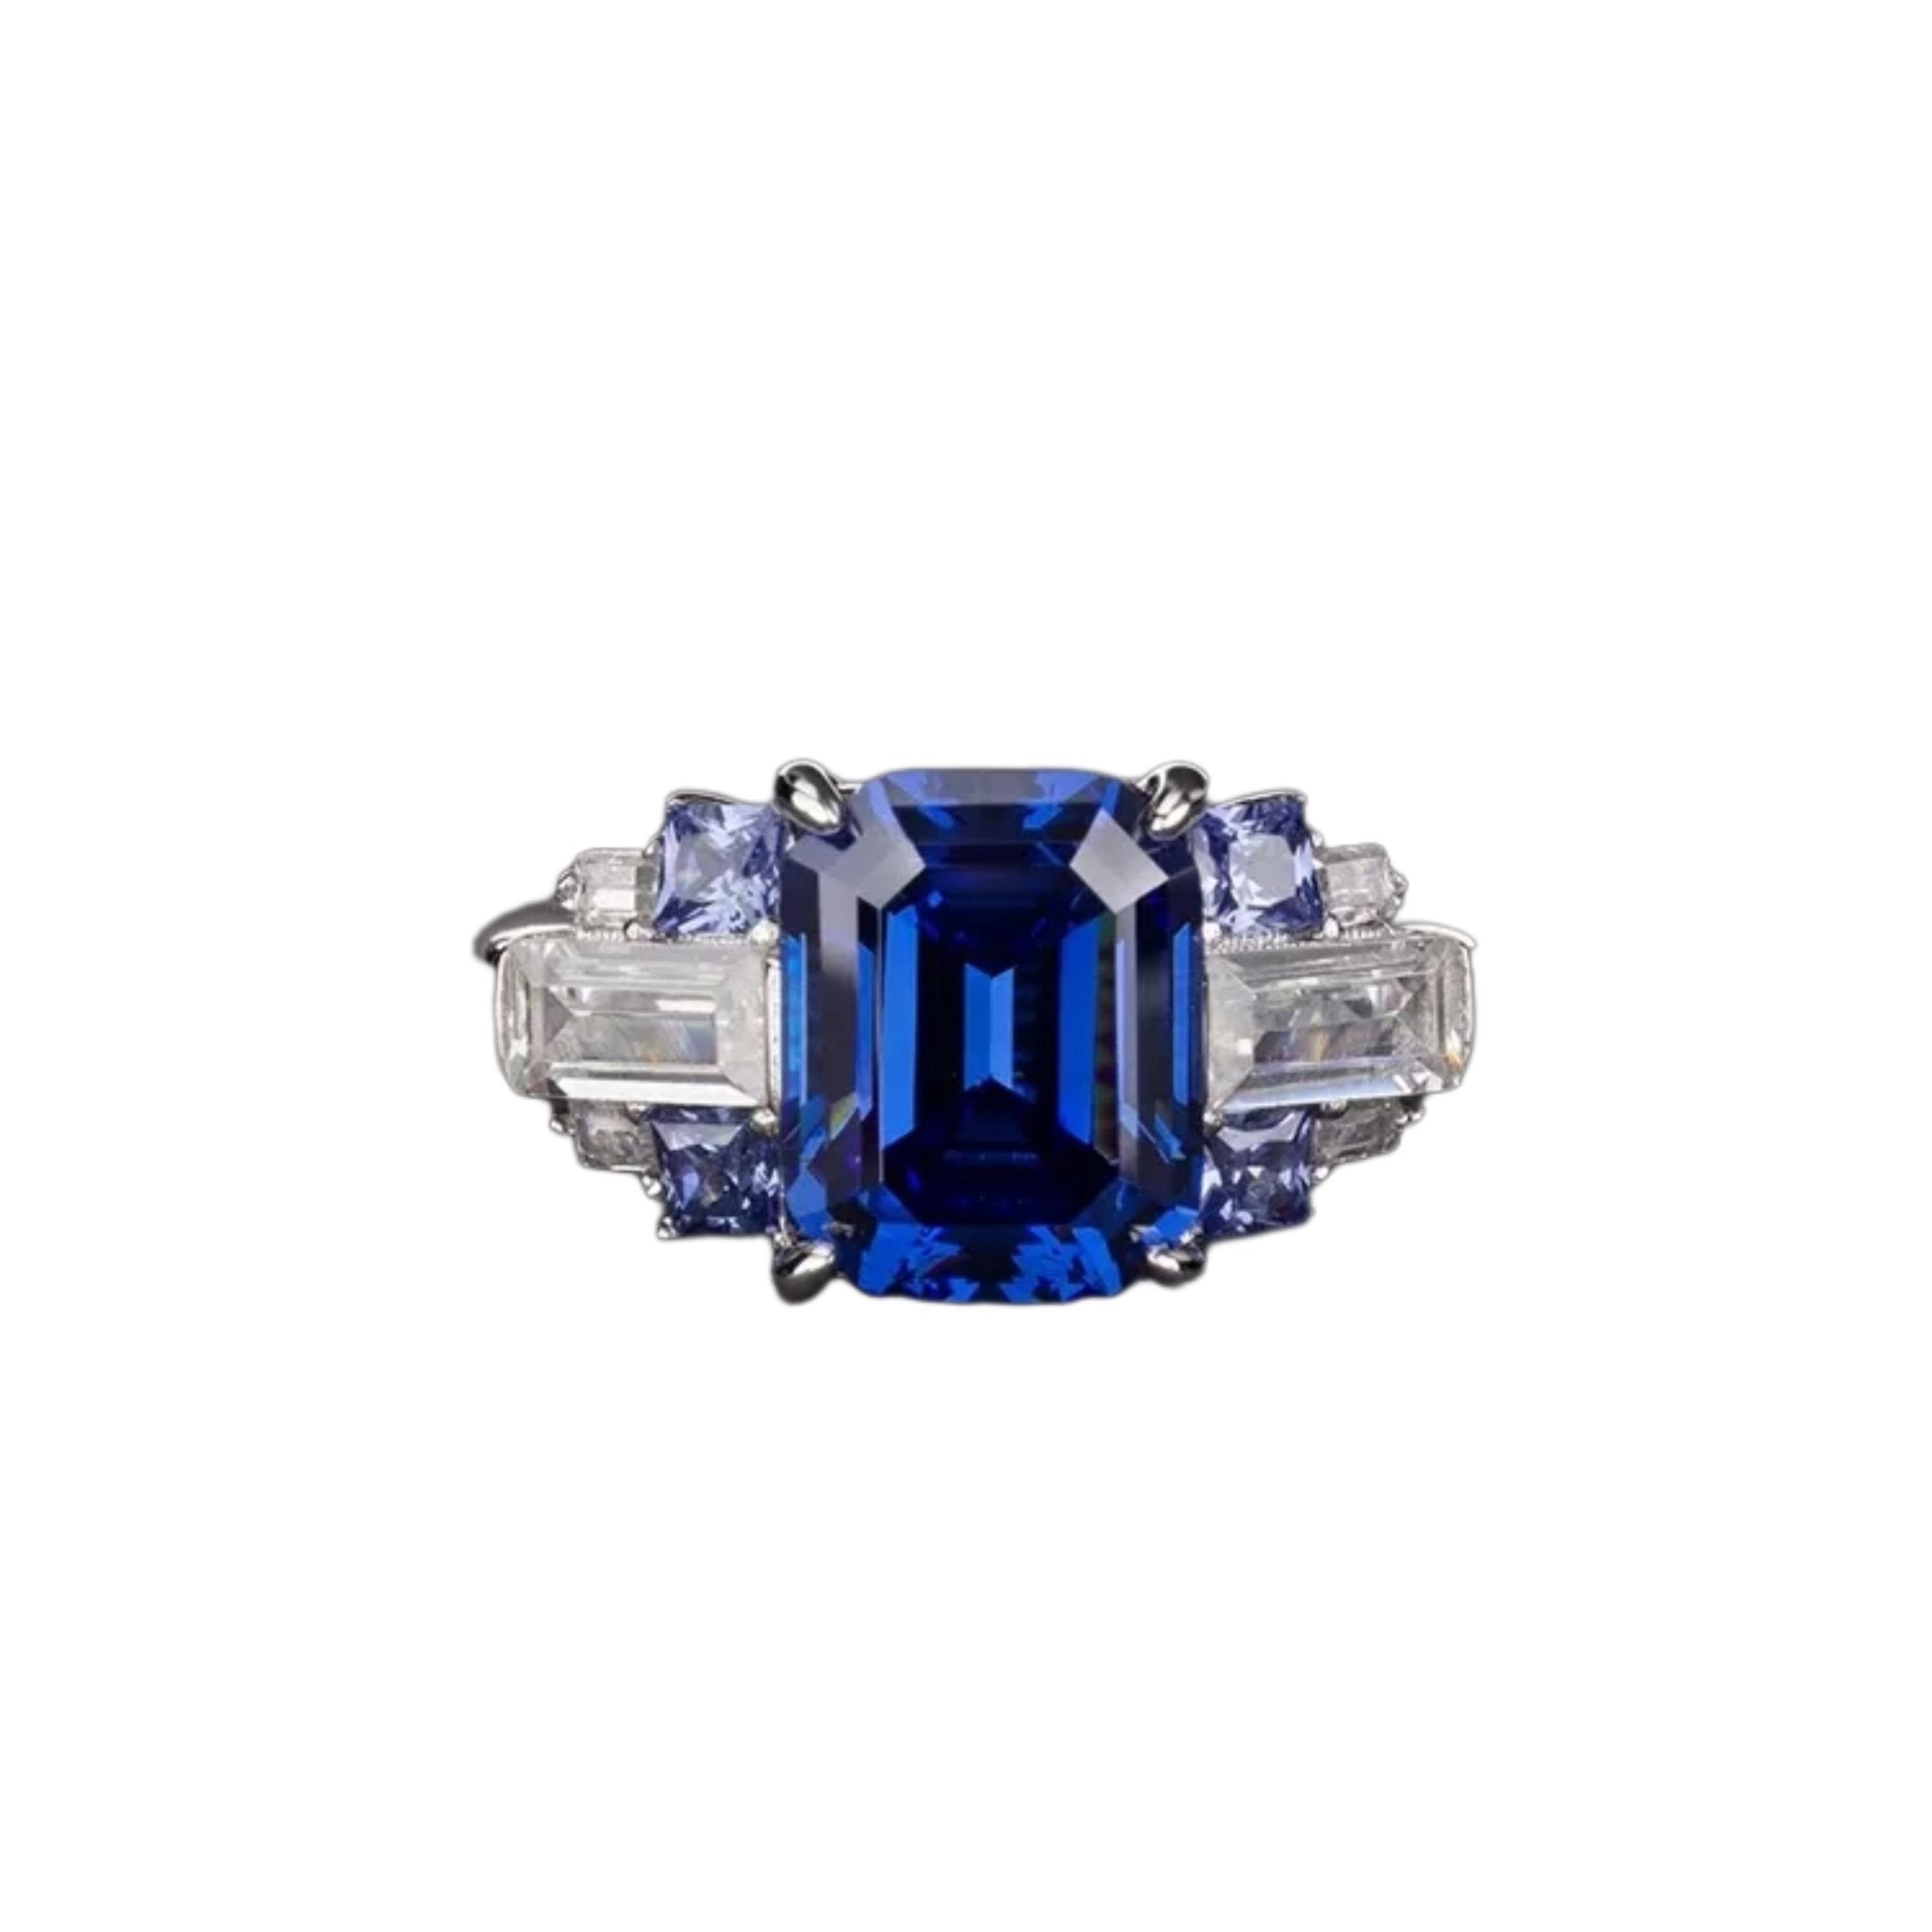 4 Carat Emerald Cut 5A Rated Sapphire Blue Cubic Zirconia Art Nouveau Engagement Ring in Platinum Plated Sterling Silver - Boutique Pavè